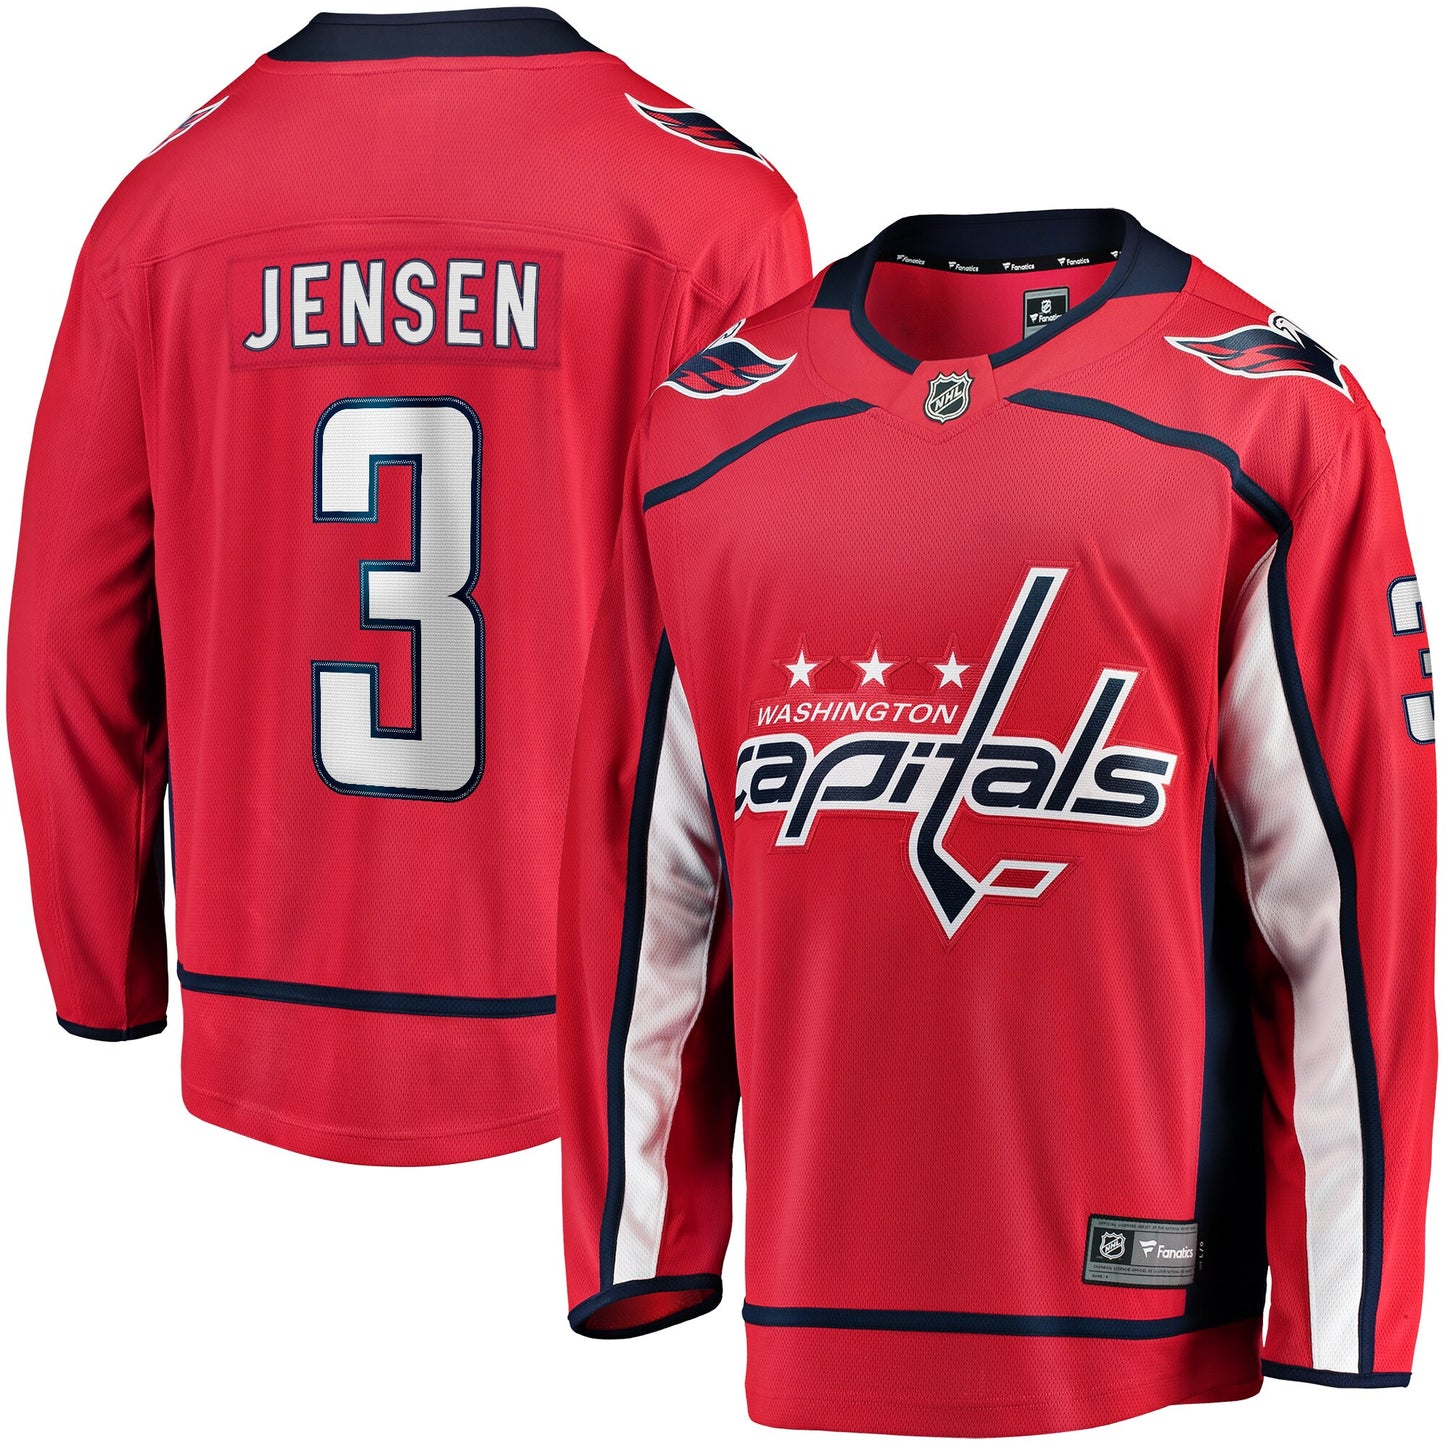 Nick Jensen Washington Capitals Fanatics Branded Replica Player Jersey - Red